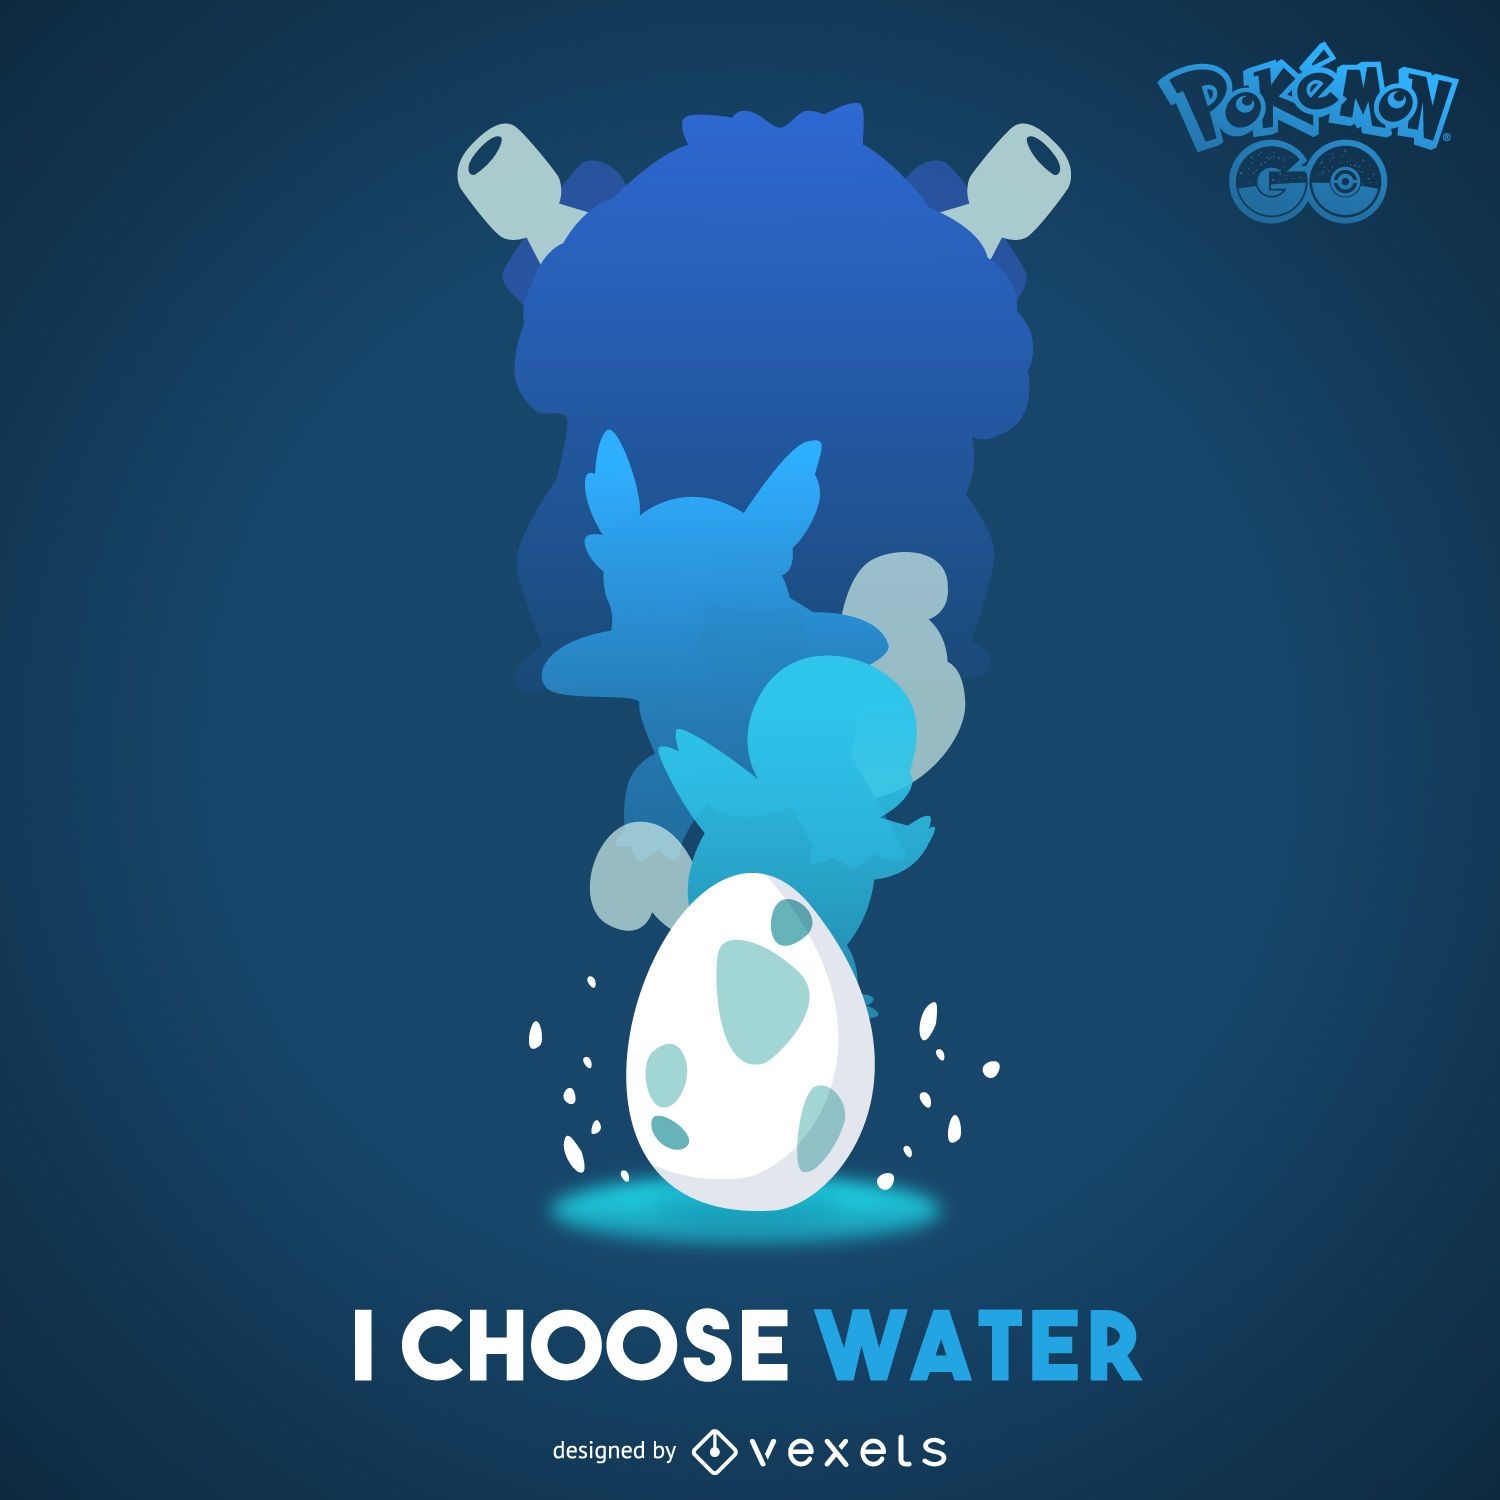 Water Pokémon poster